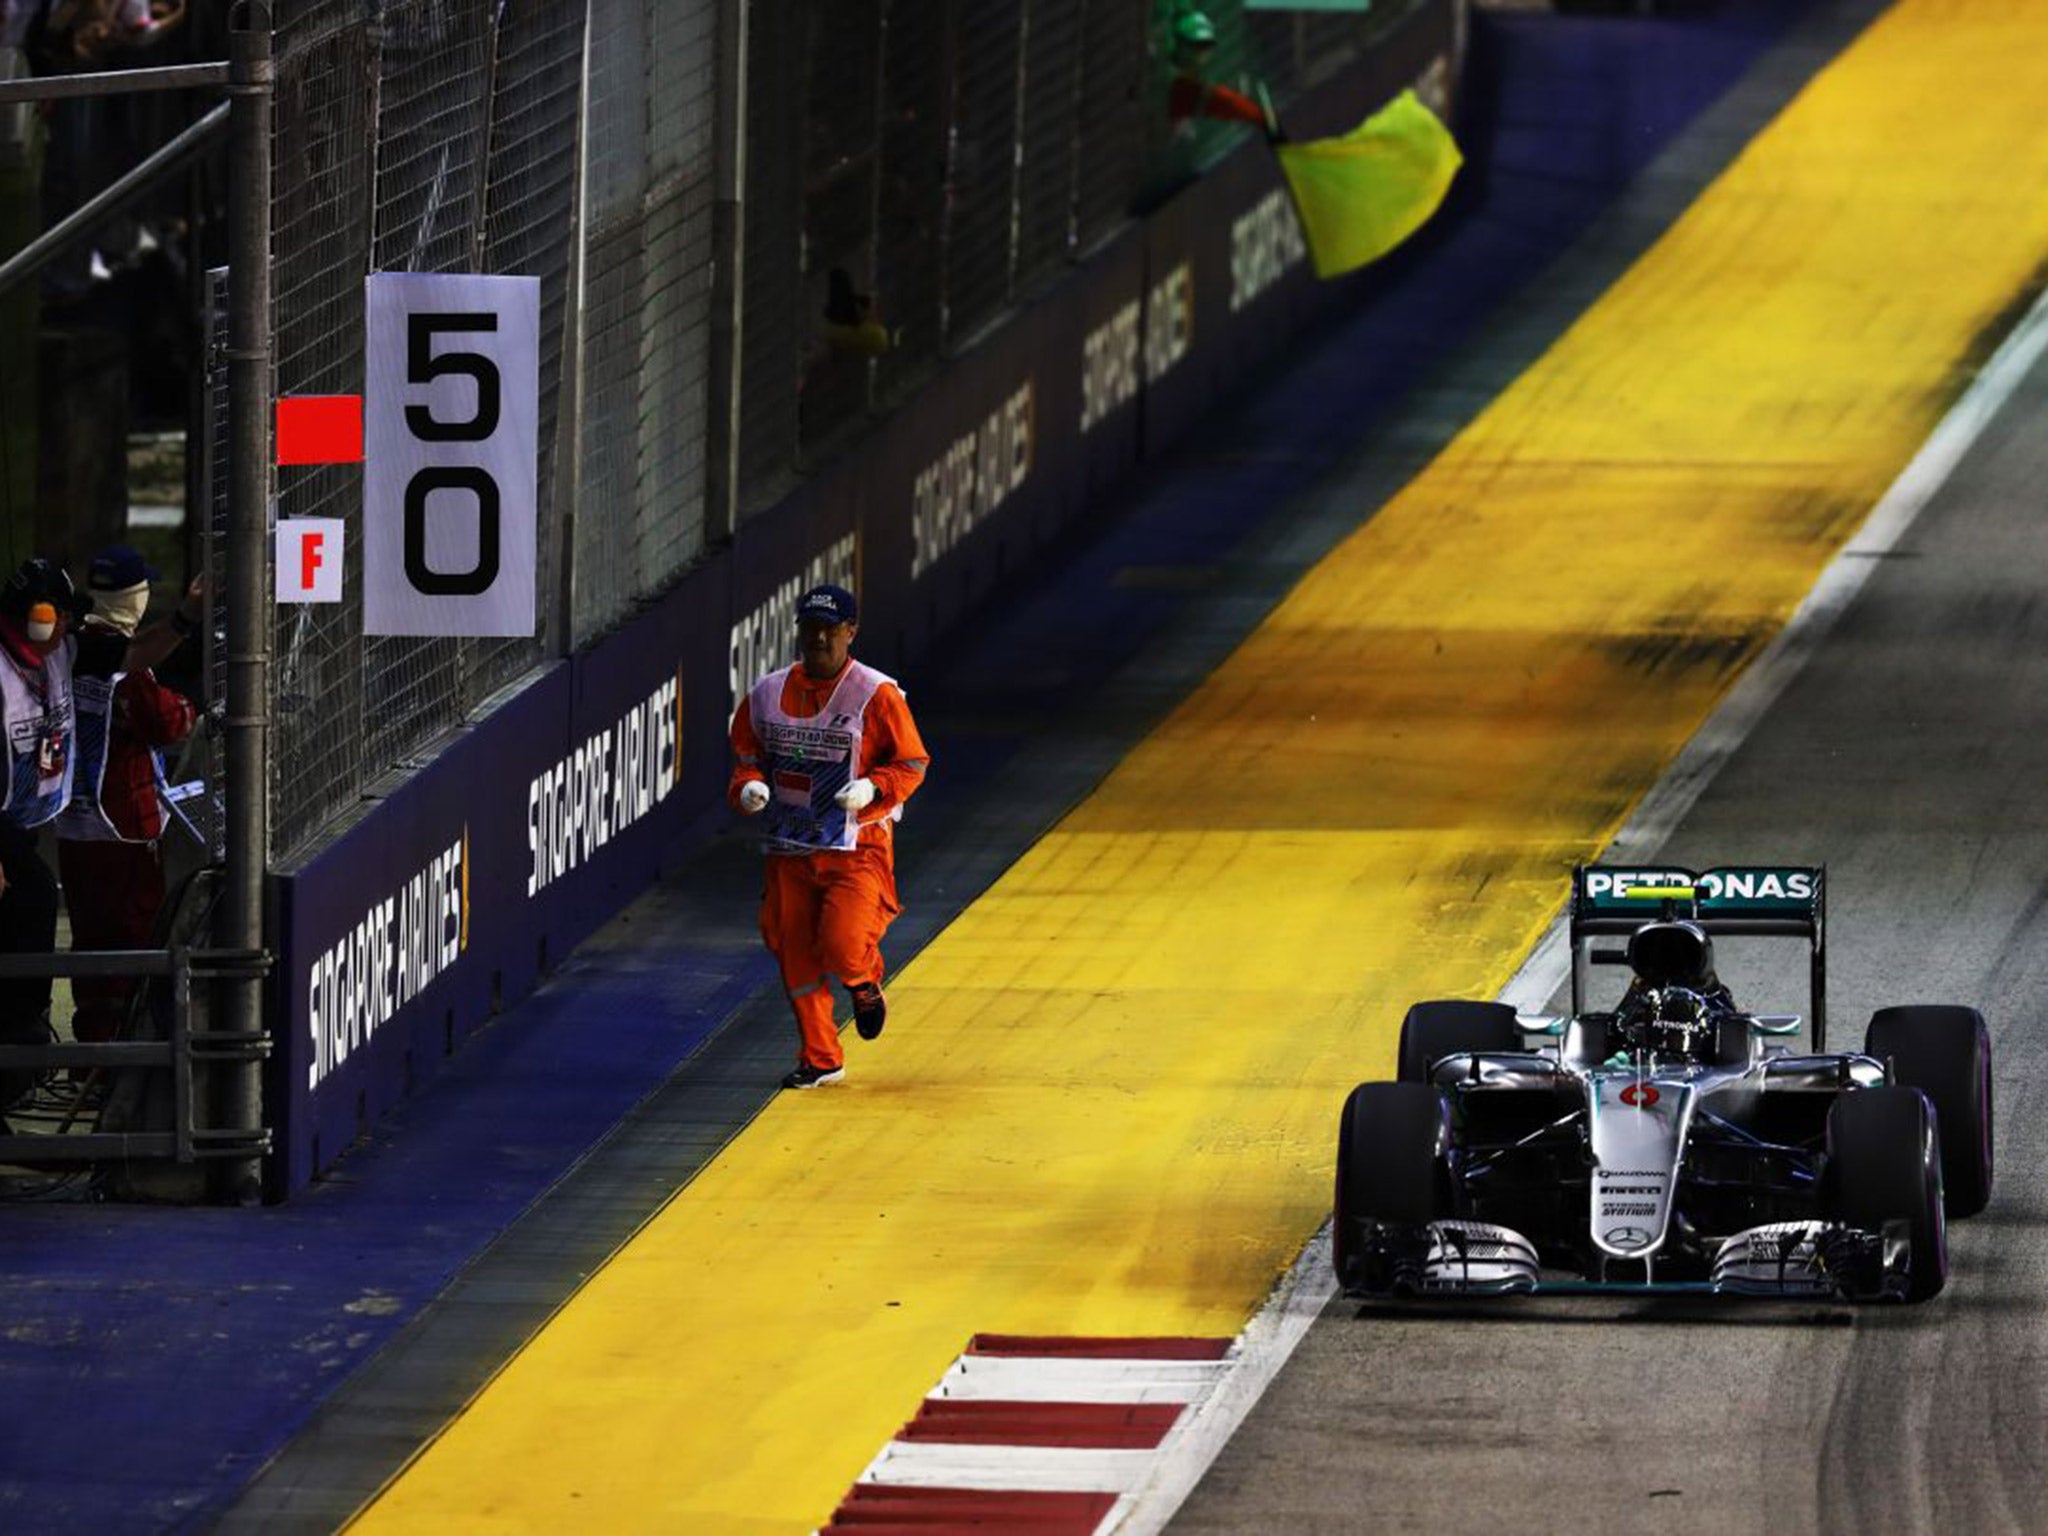 Nico Rosberg narrowly avoids hitting a marshal during the Singapore Grand Prix